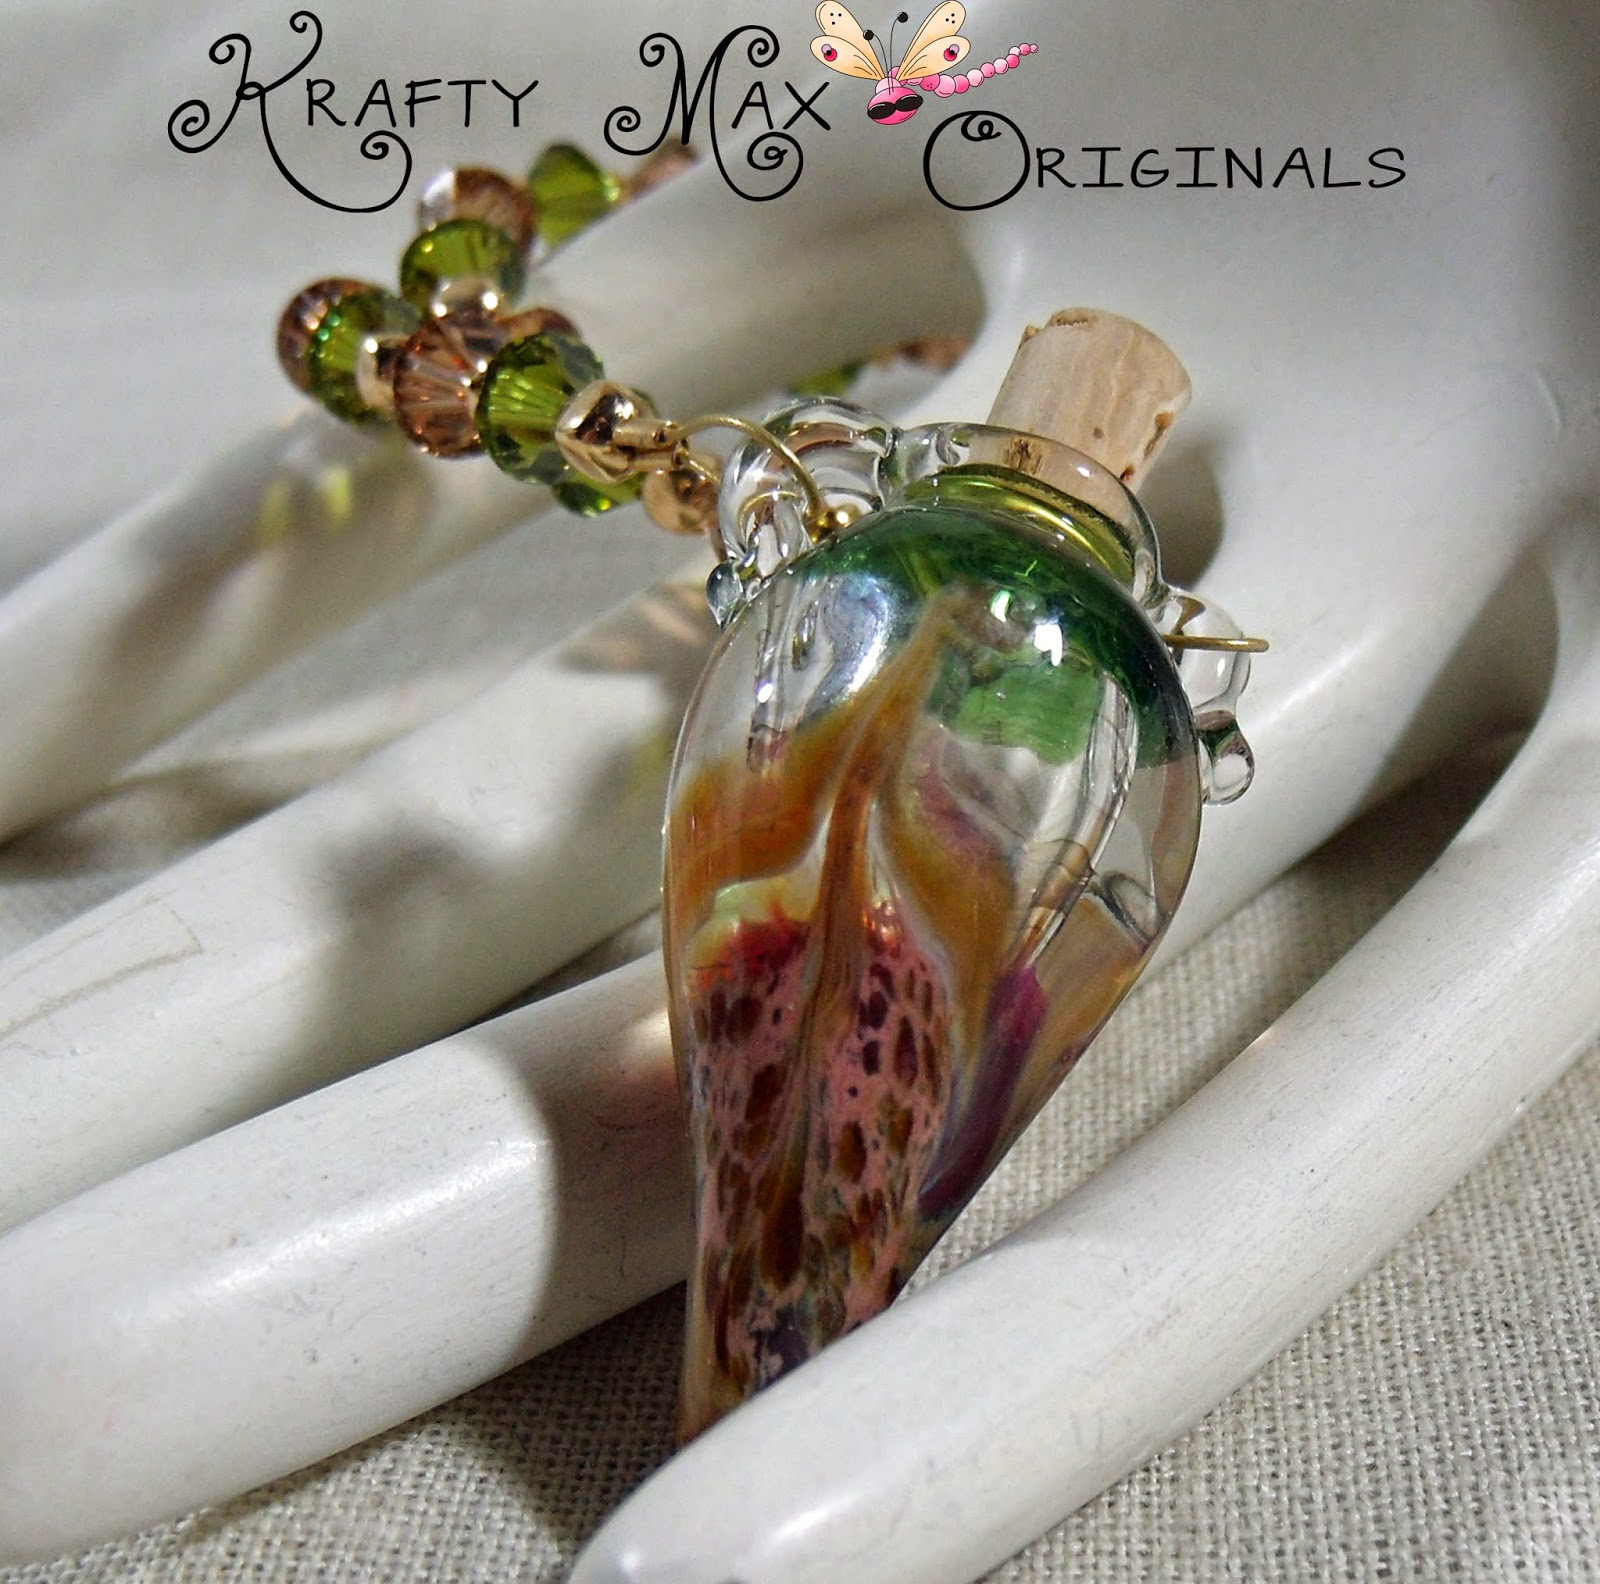 http://www.artfire.com/ext/shop/product_view/KraftyMax/9039649/isinglass_designed_lampwork_bottle_and_swarovski_crystal_necklace_set/handmade/jewelry/sets/lampwork